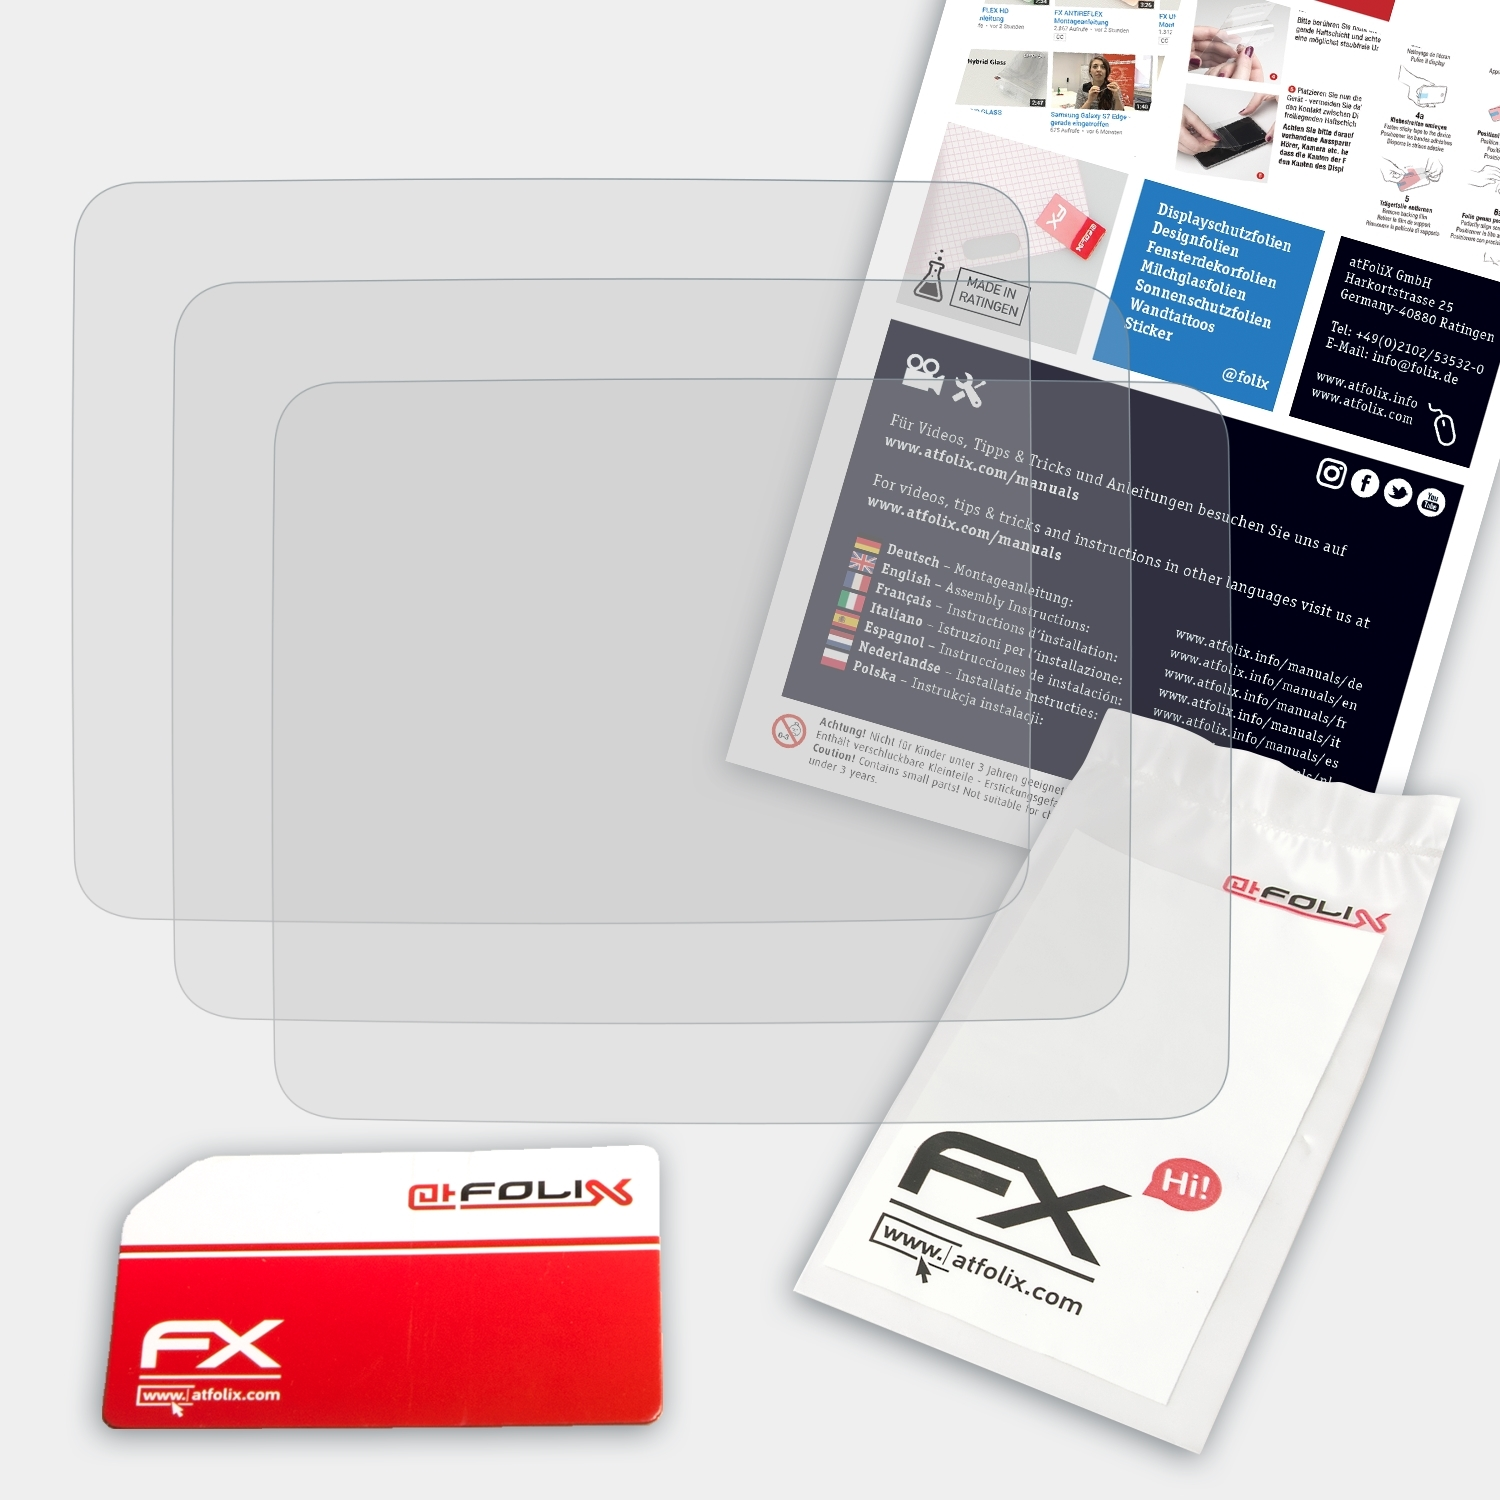 ATFOLIX 3x FX-Antireflex Displayschutz(für Fujifilm XP120) FinePix